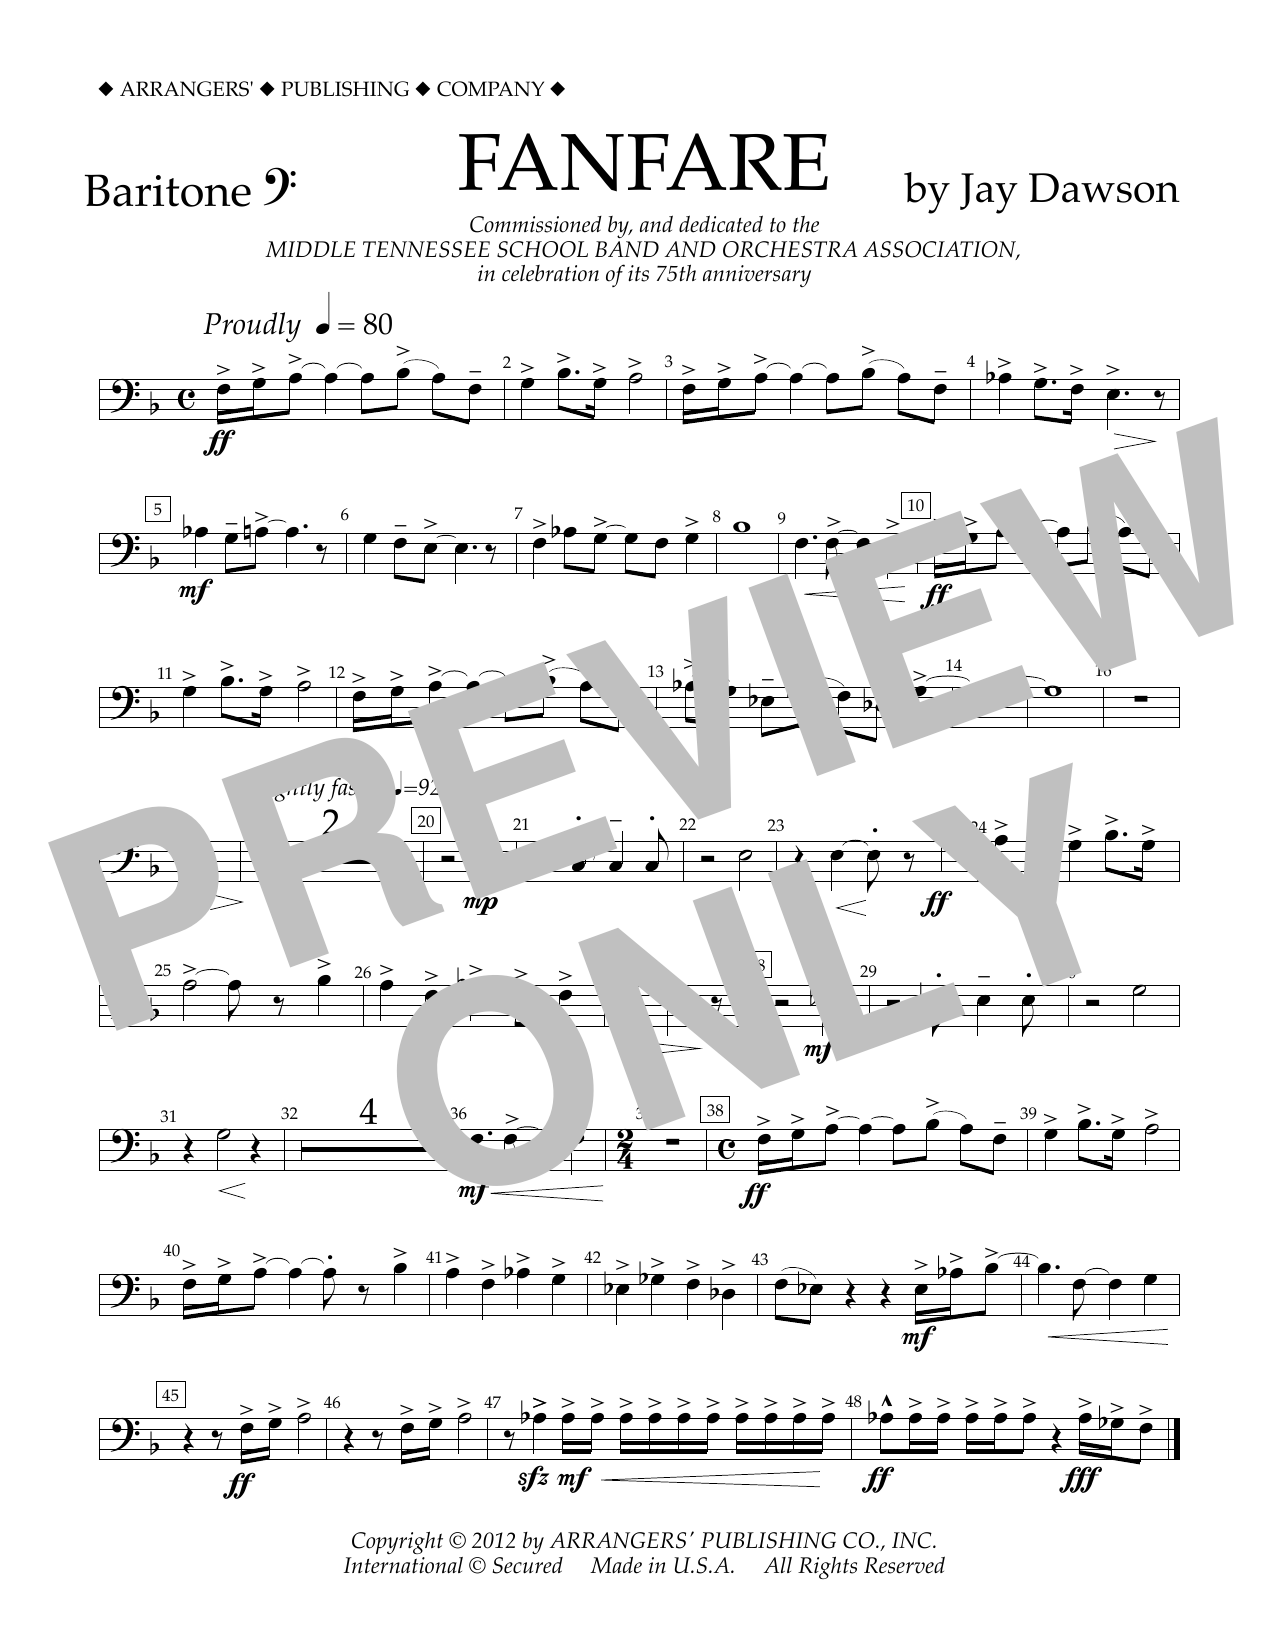 Jay Dawson Fanfare - Baritone B.C. Sheet Music Notes & Chords for Concert Band - Download or Print PDF